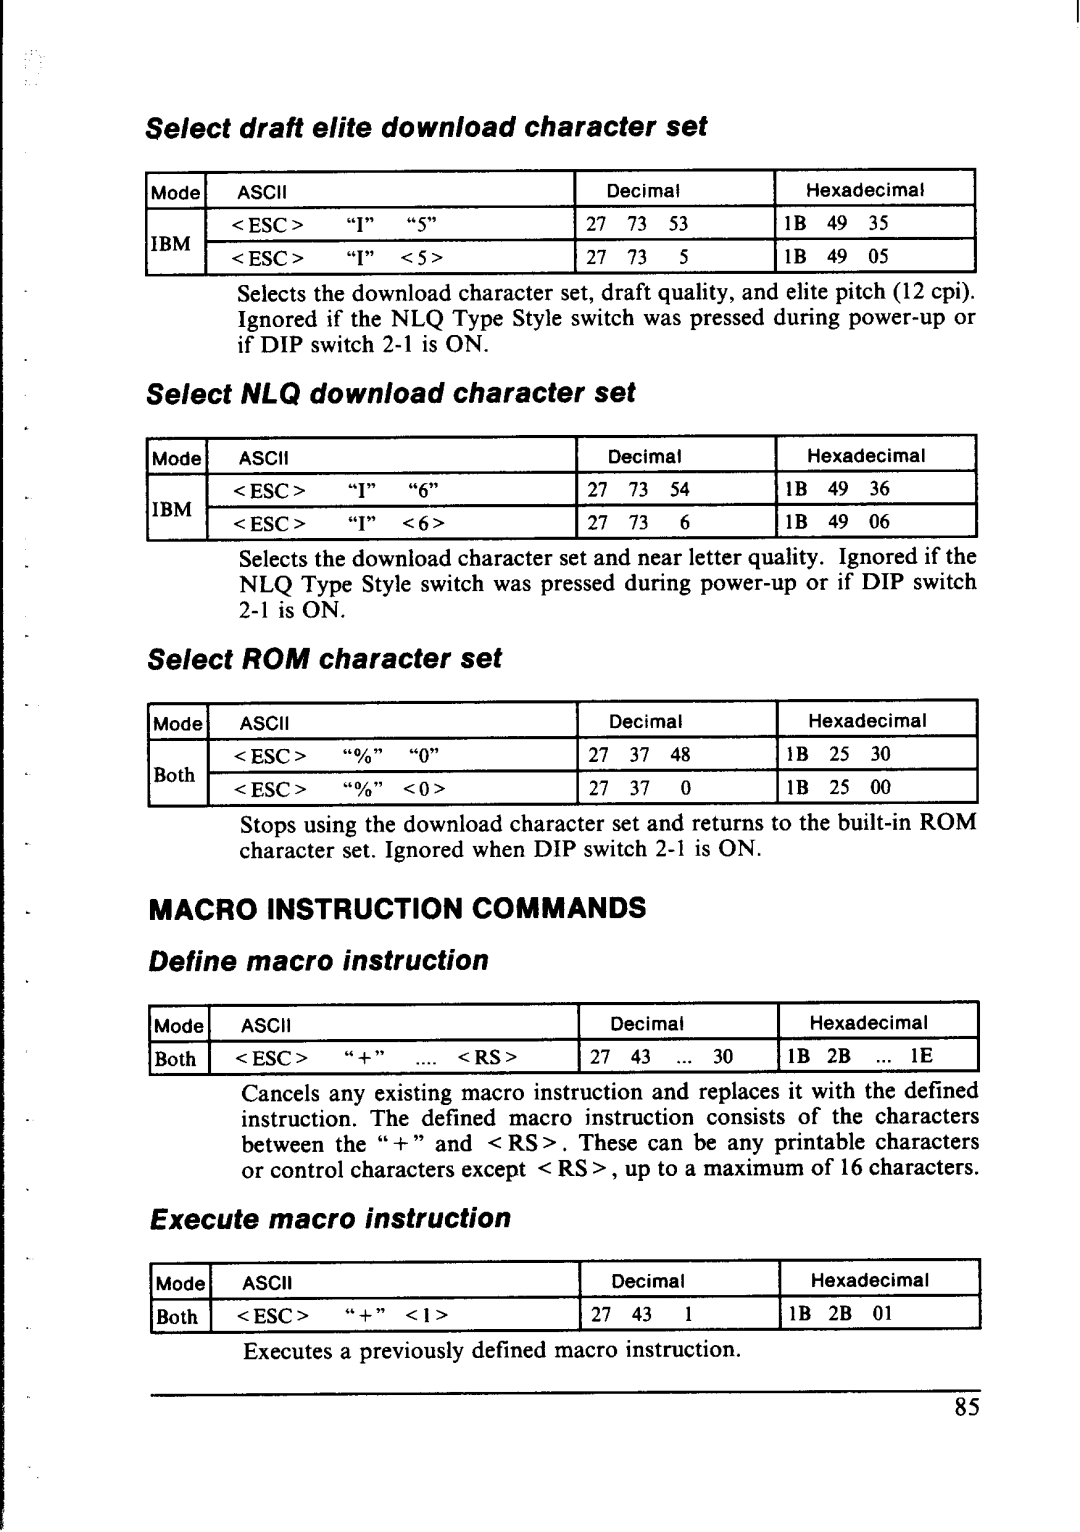 Star Micronics NX-1000 manual Select draft elite download character set, Select NLO download character set, Define, macro 